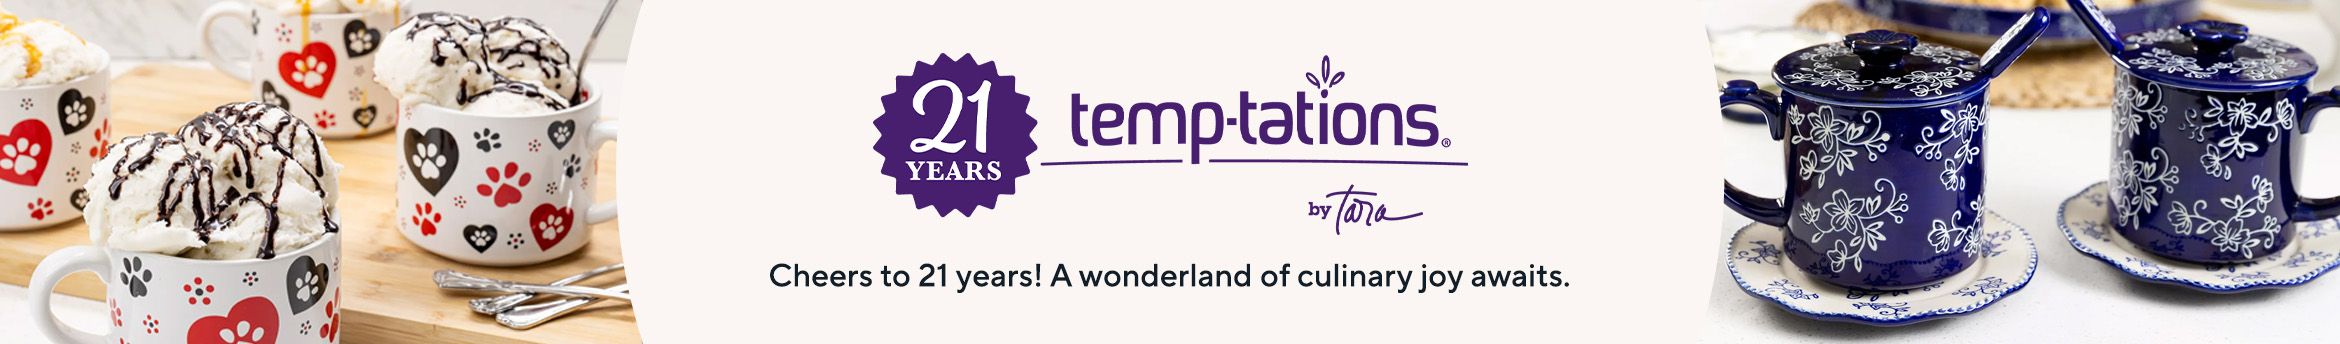 Temp-tations® 21st Anniversary. Cheers to 21 years! A wonderland of culinary joy awaits.